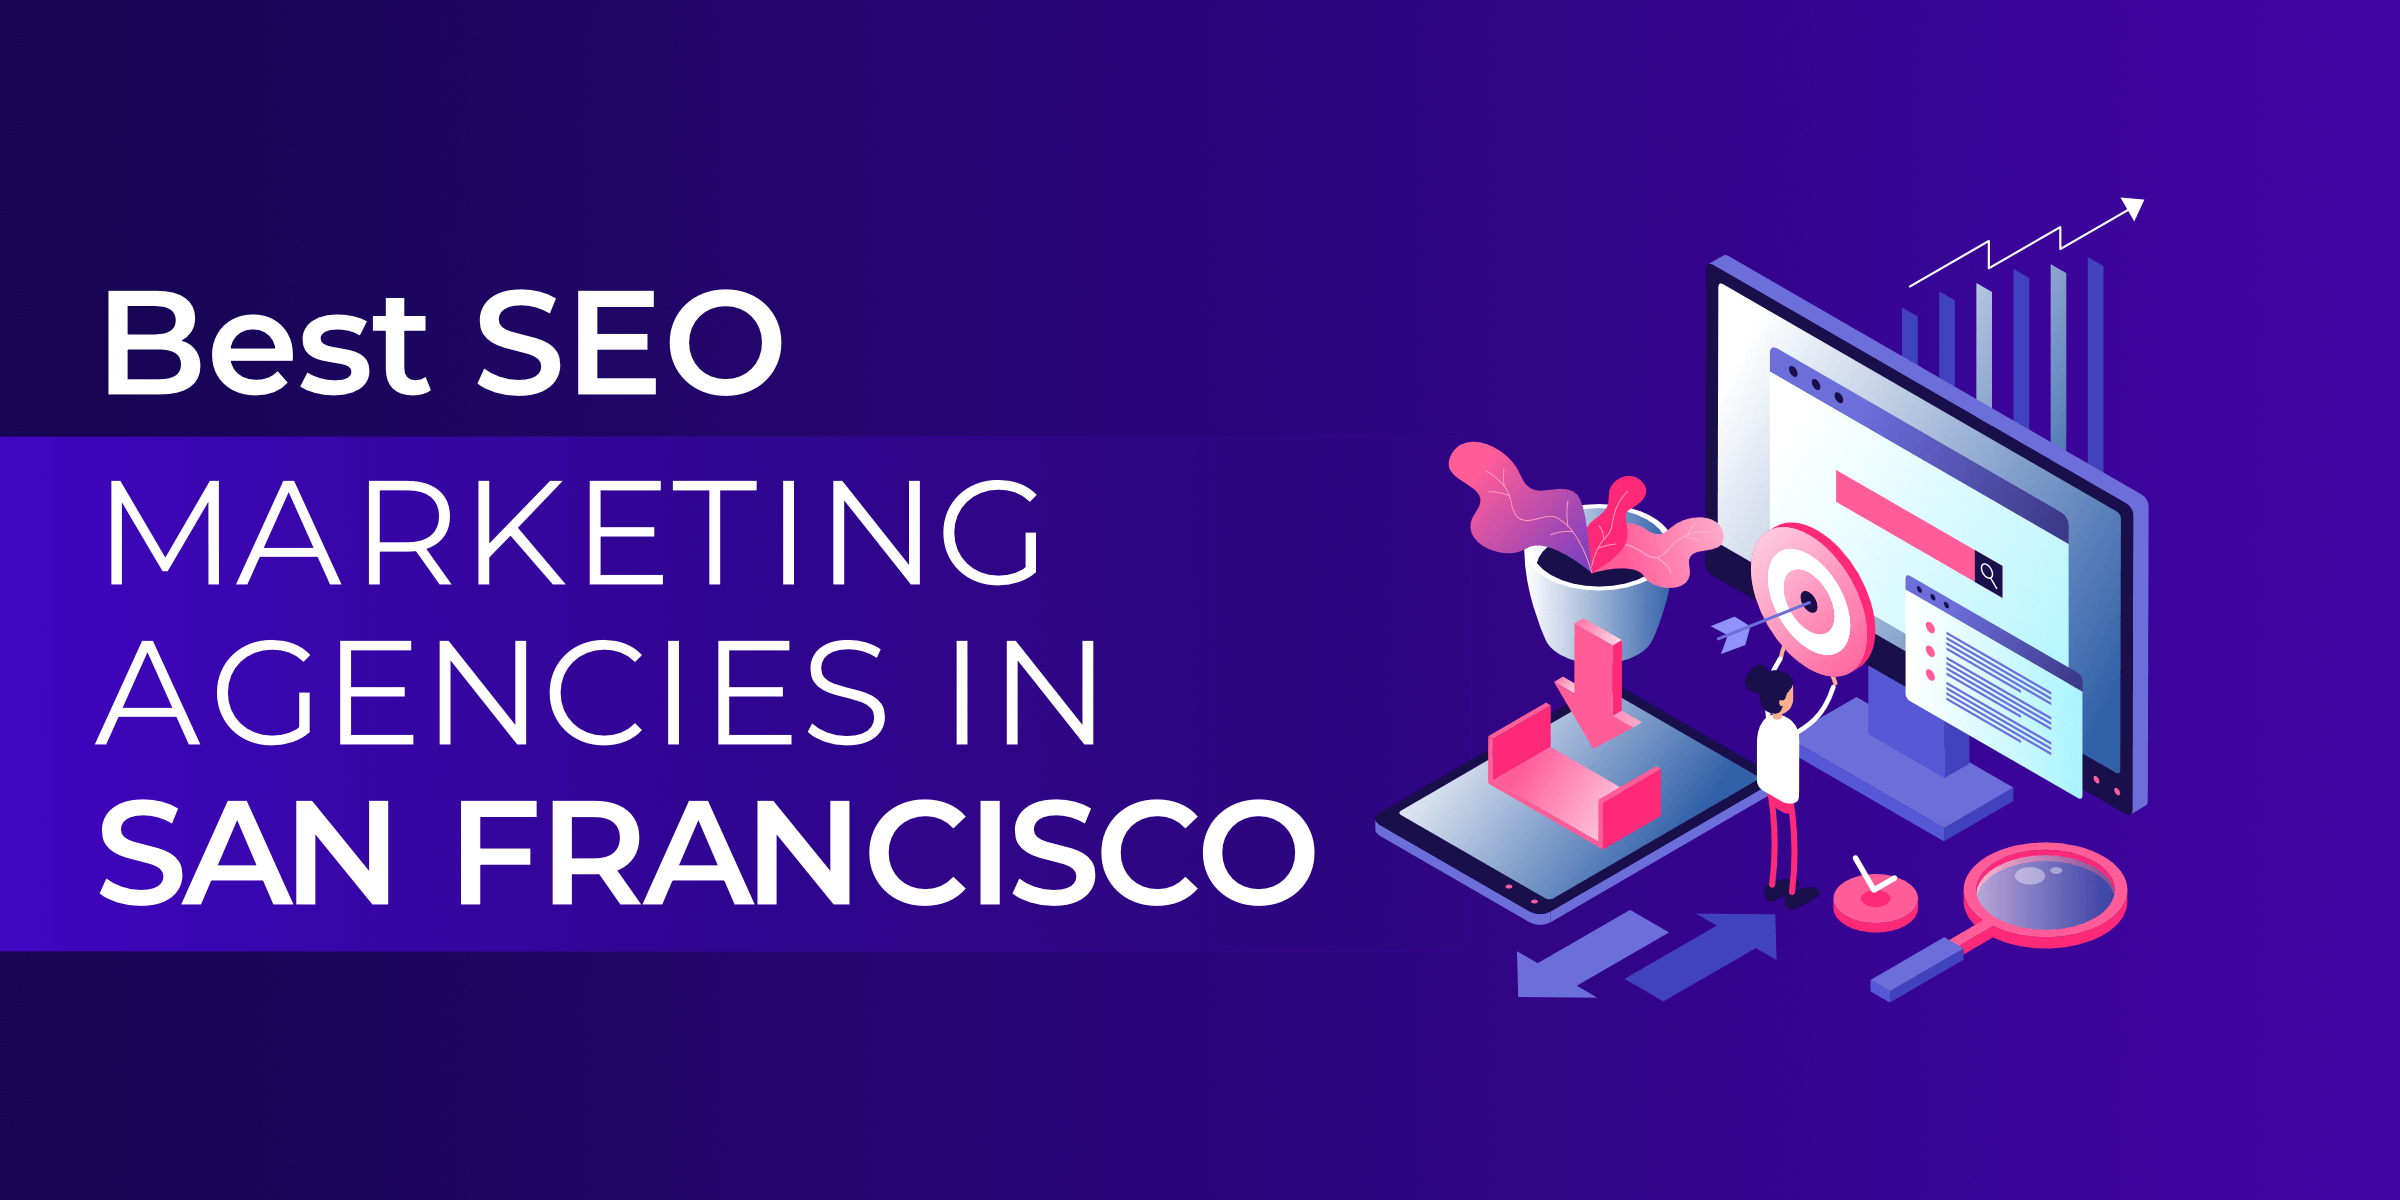 Best SEO Marketing Agencies in San Francisco